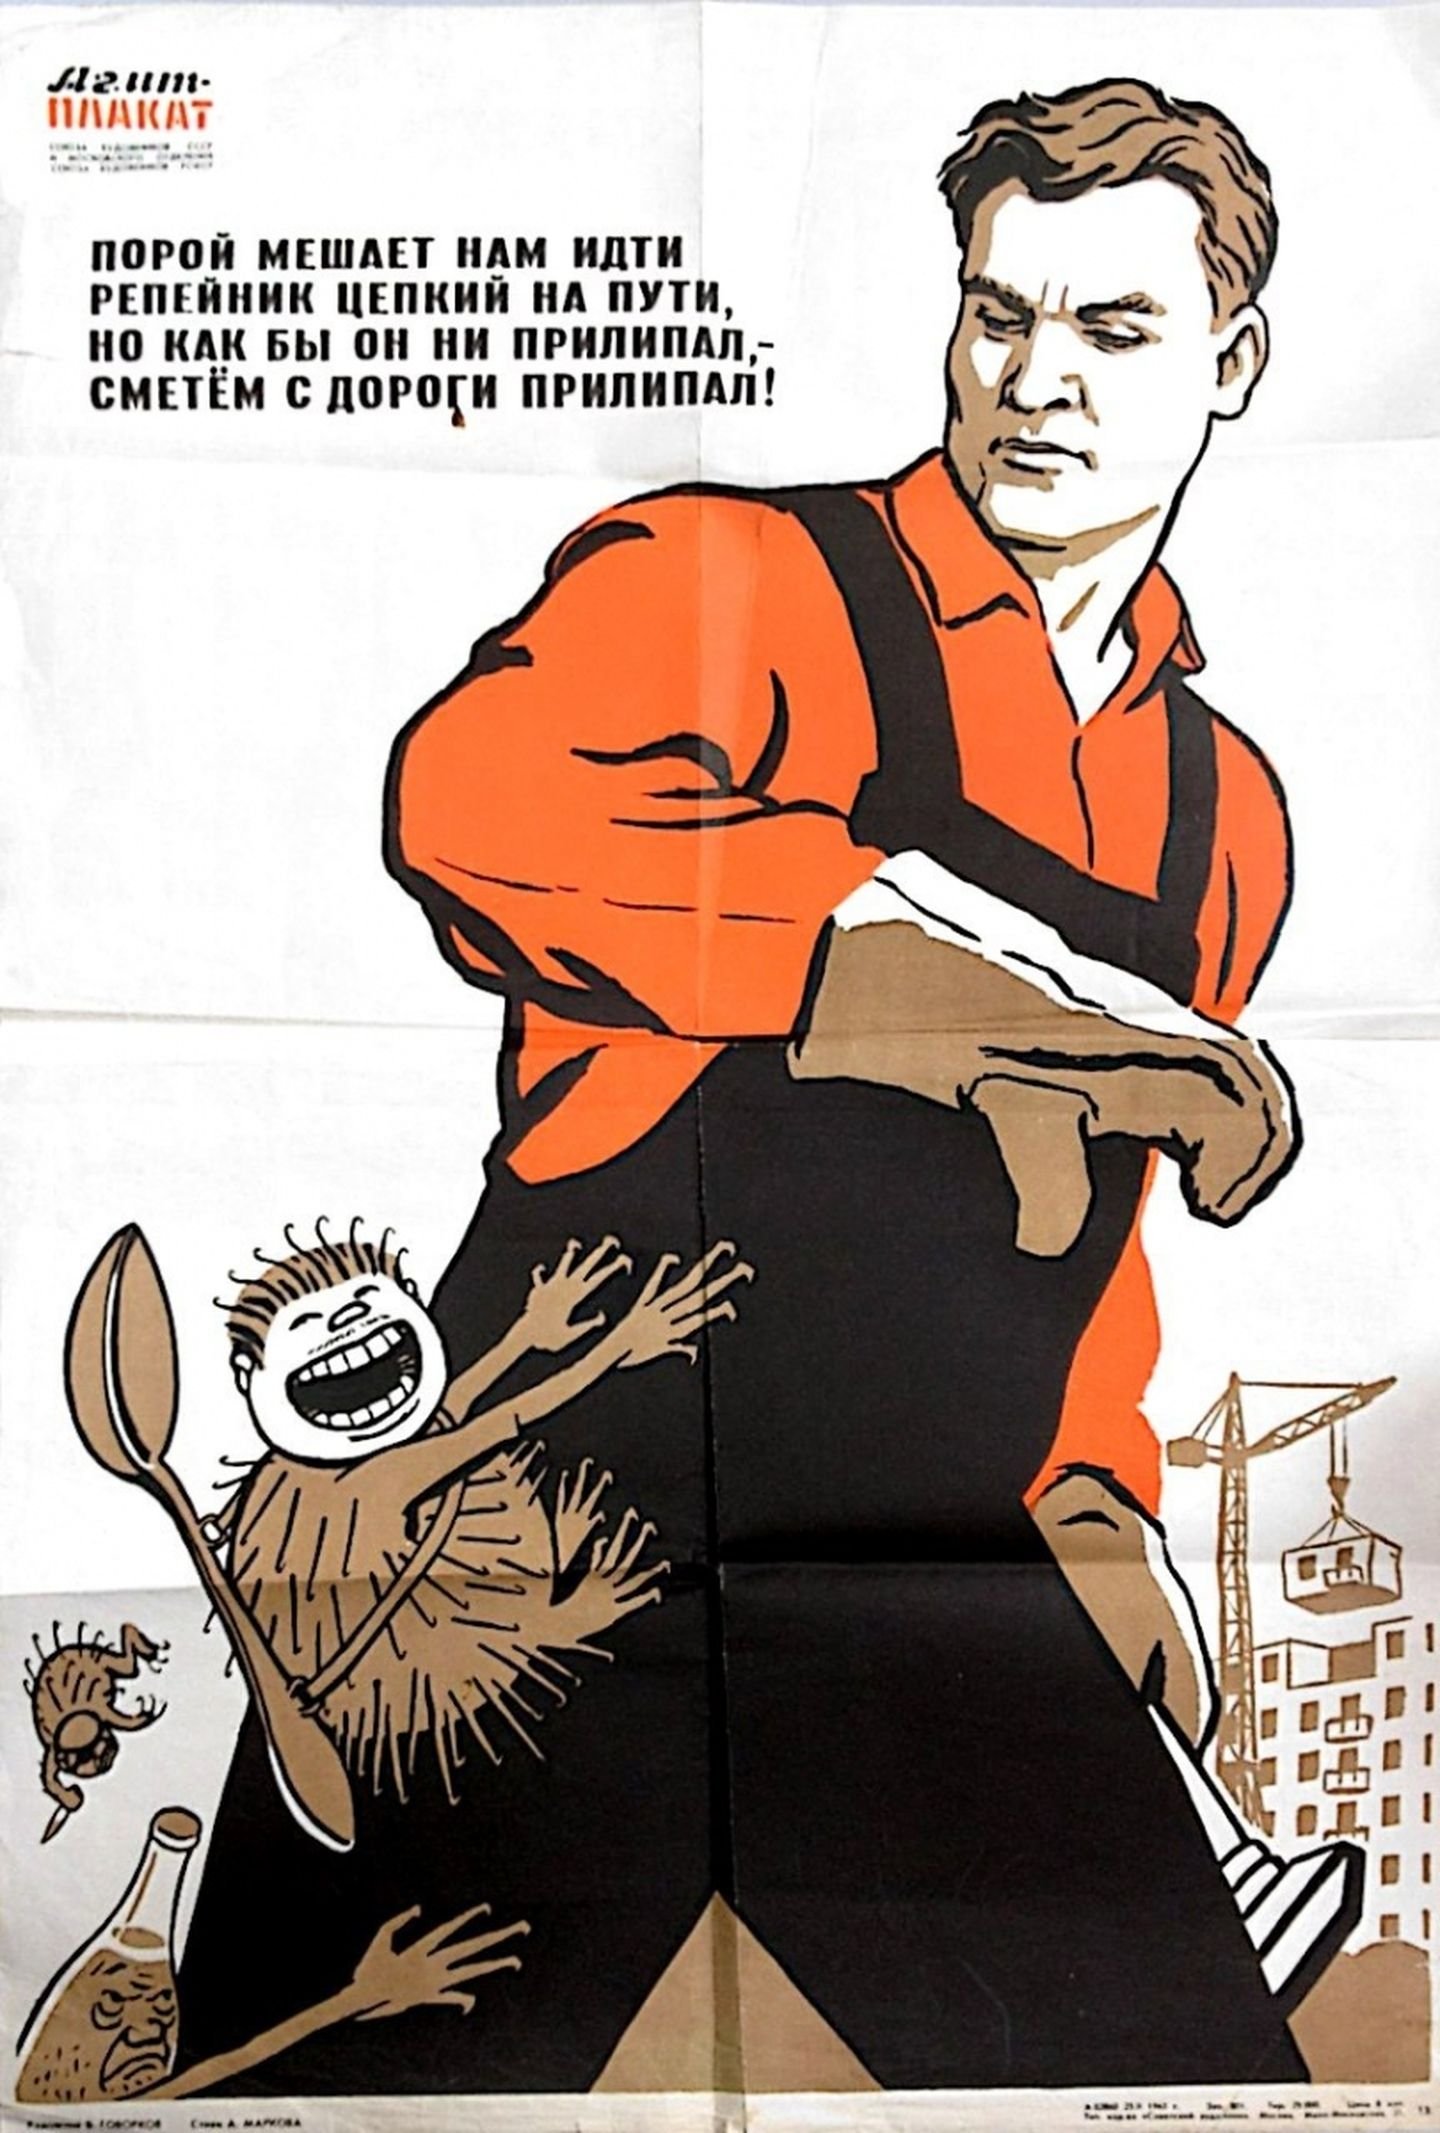 Буду работать плакат. Советские плакаты. Советские лозунги и плакаты. Советские платки. Советские агитационные плакаты.